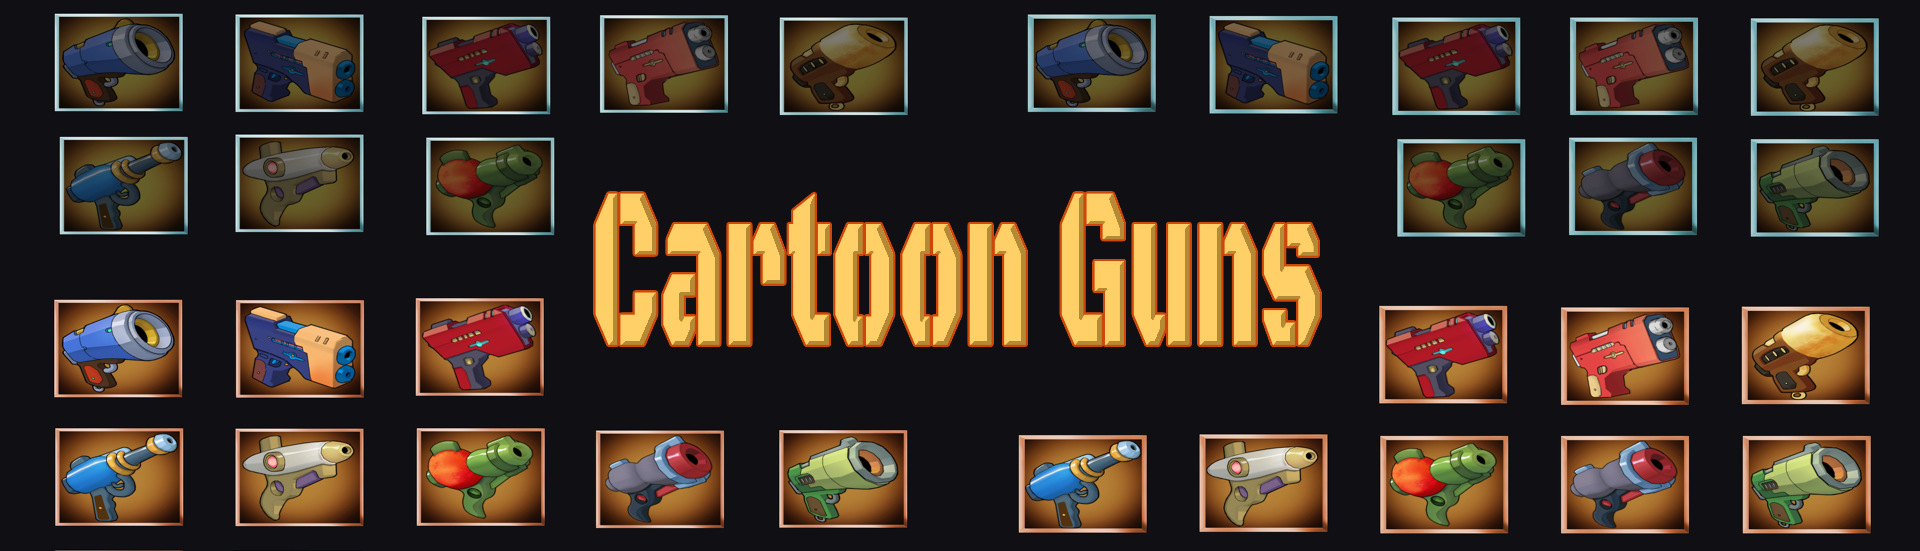 Cartoon Guns